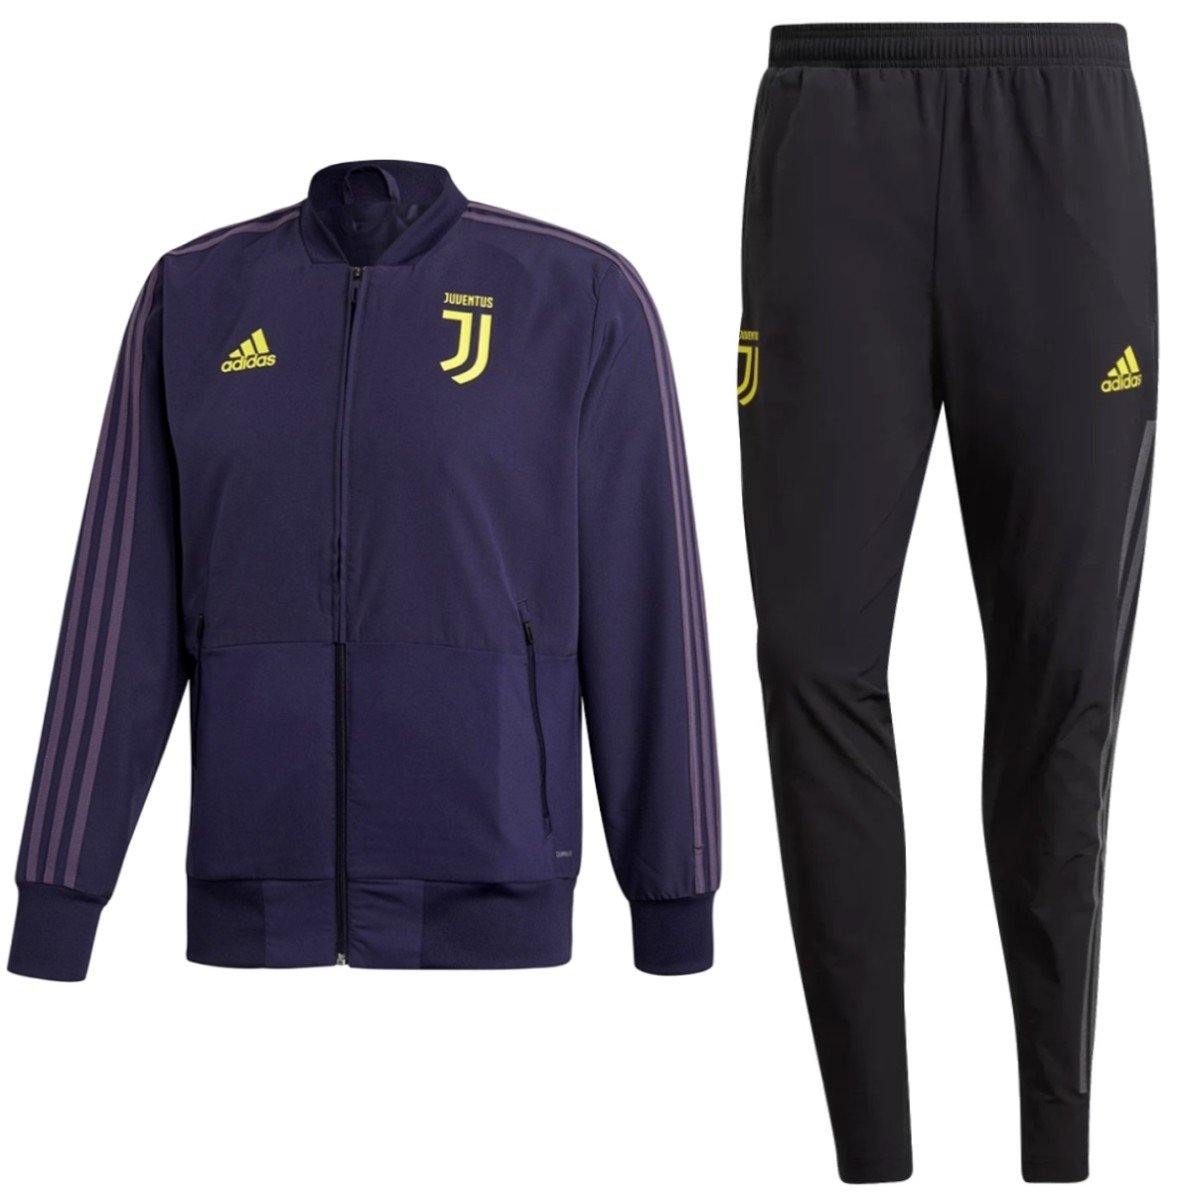 Juventus training presentation soccer tracksuit 2018/19 - Adidas – SoccerTracksuits.com